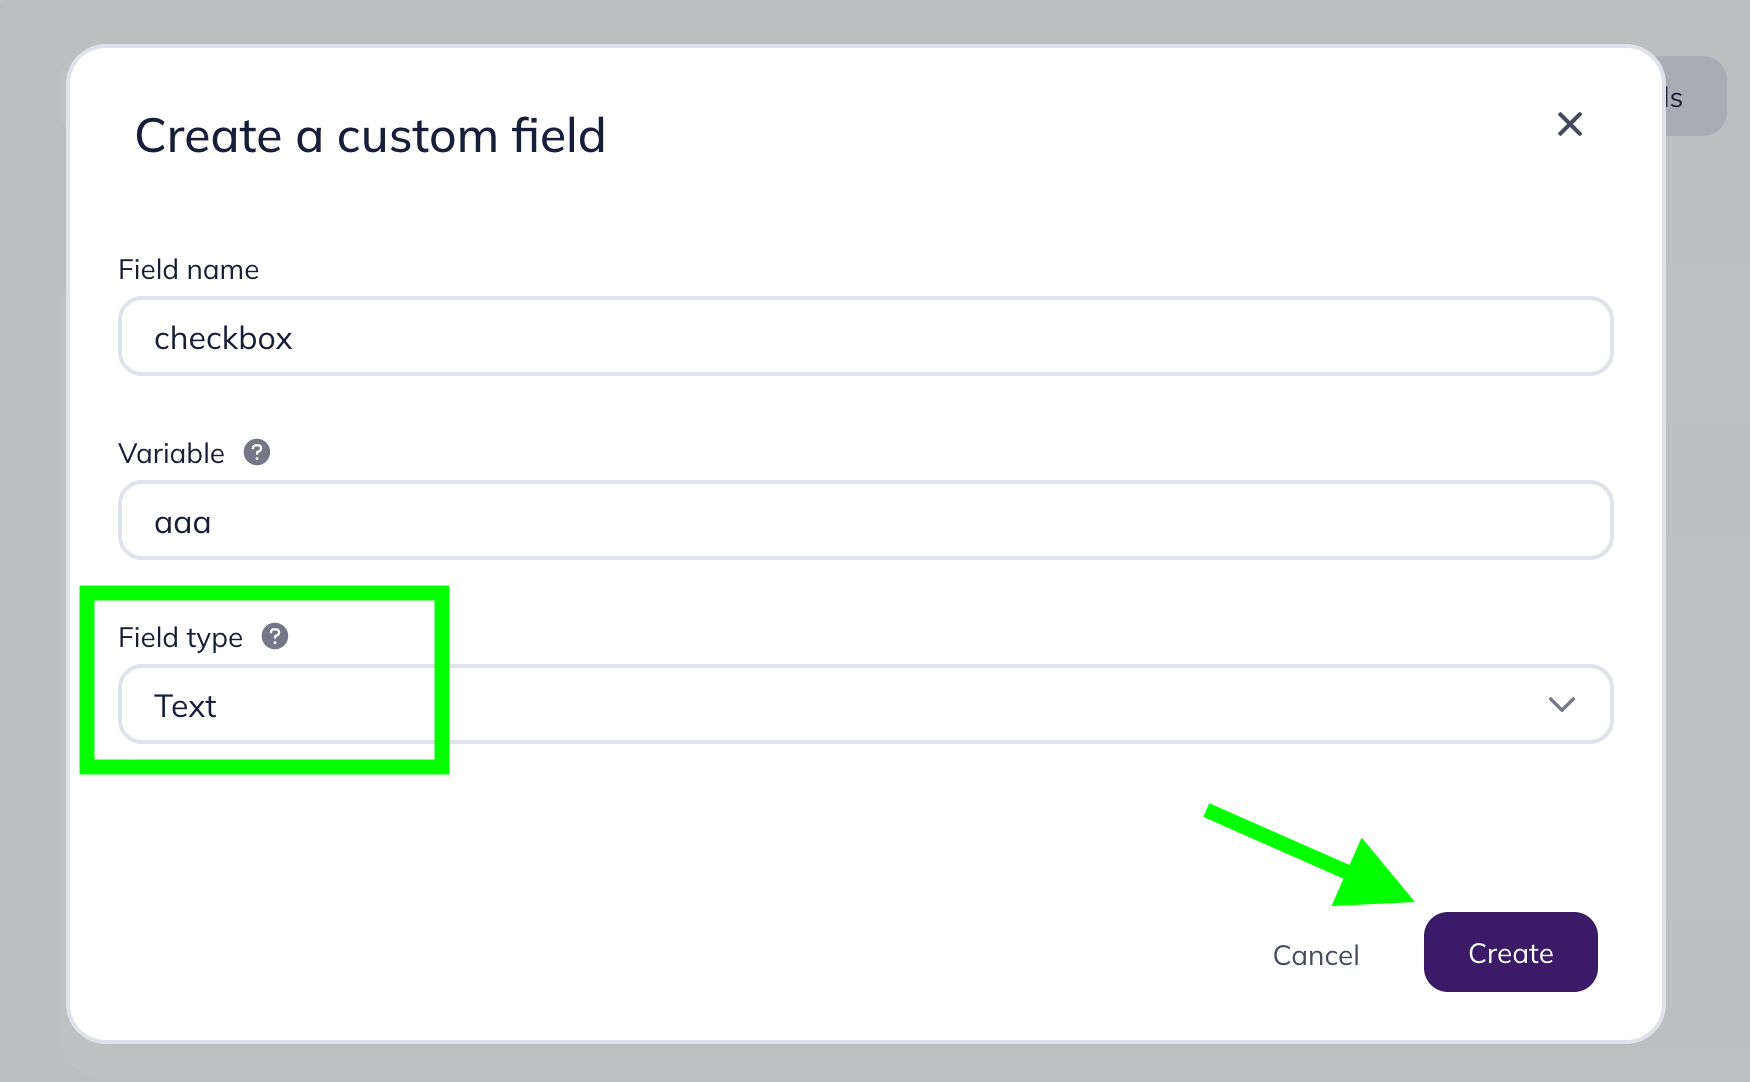 Naming the custom field 